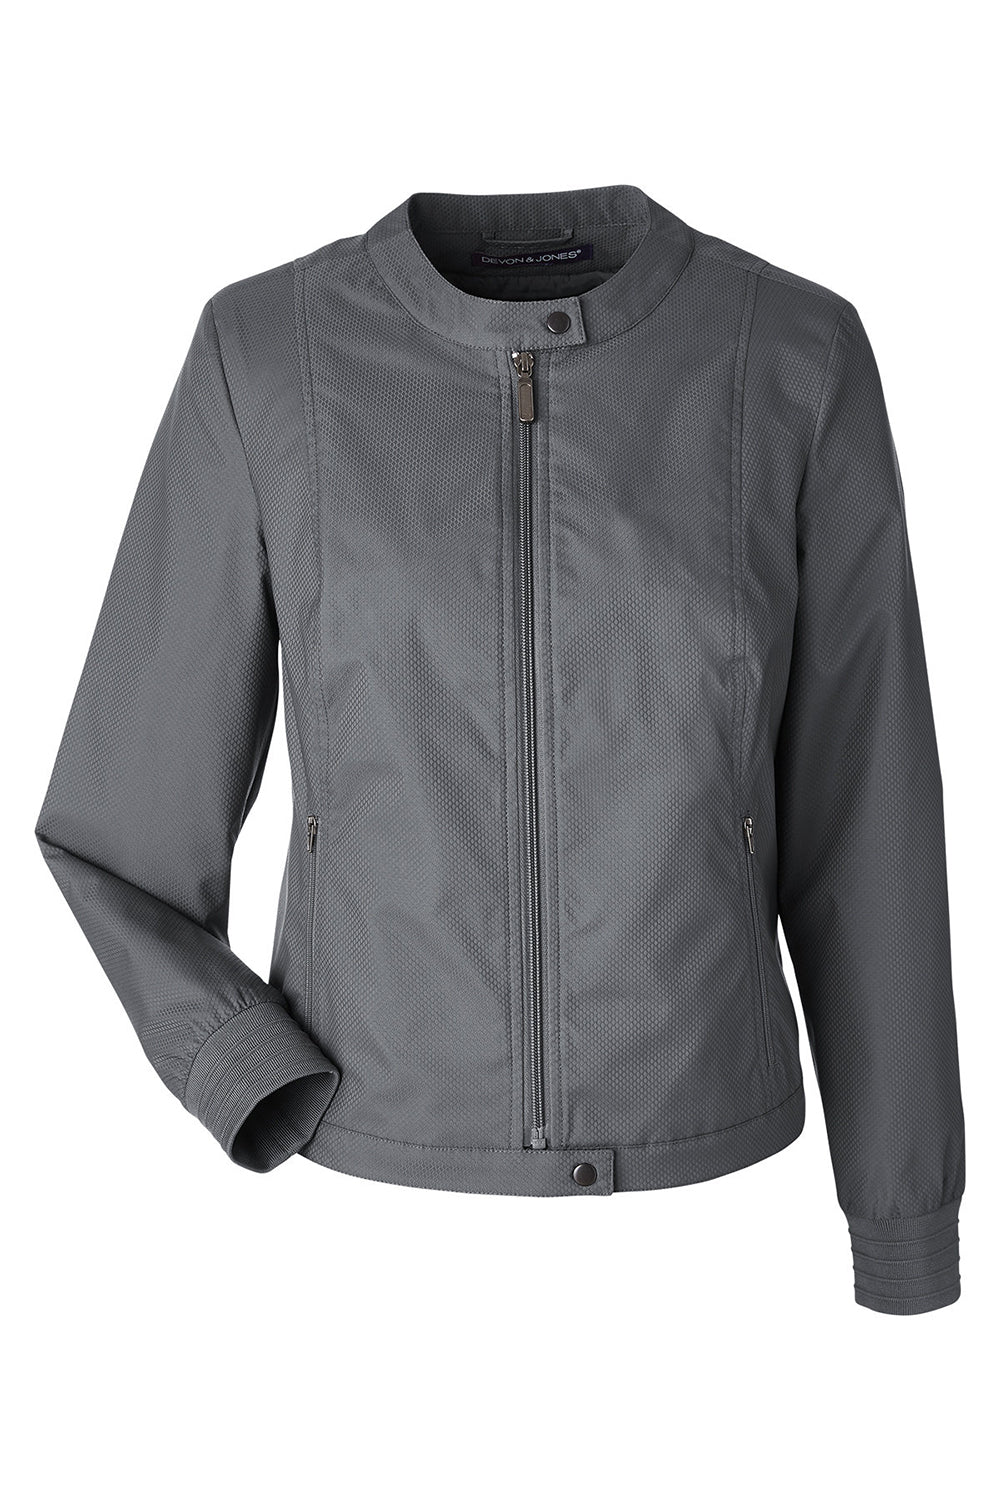 Devon & Jones DG700W Womens Vision Club Full Zip Jacket Graphite Grey Flat Front